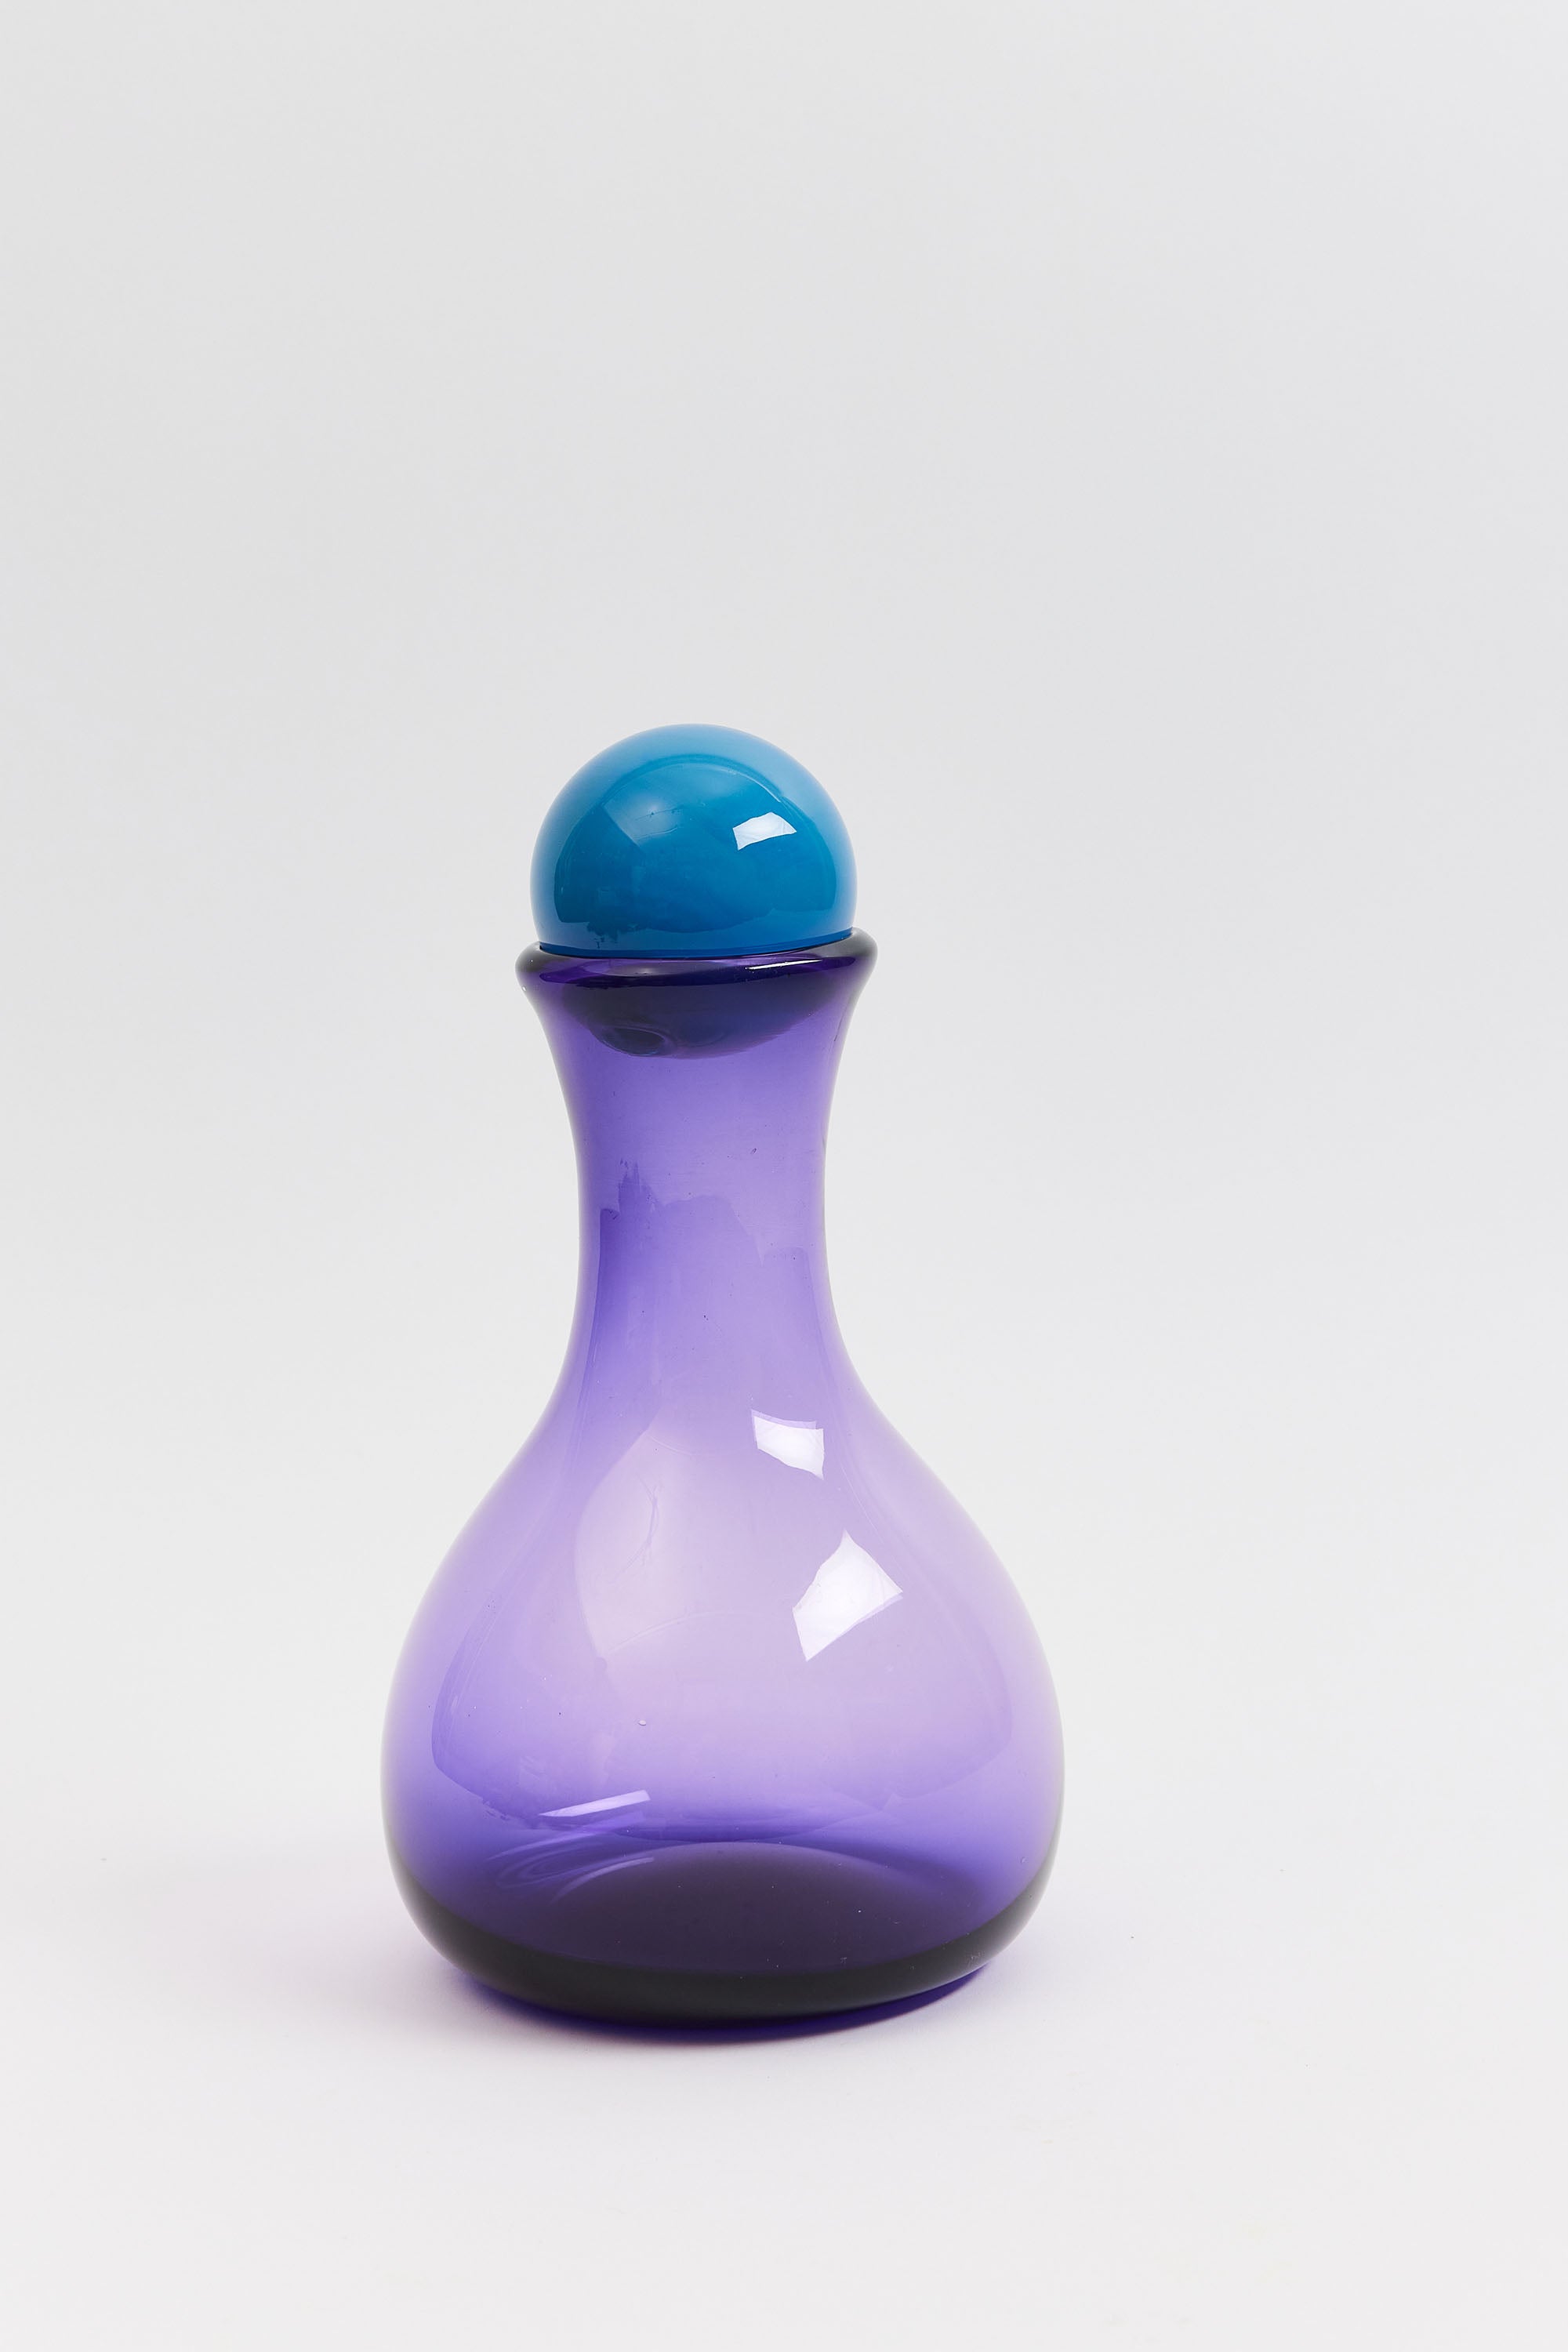 Michael Anchin Short Plum Vase with Lapis Ball